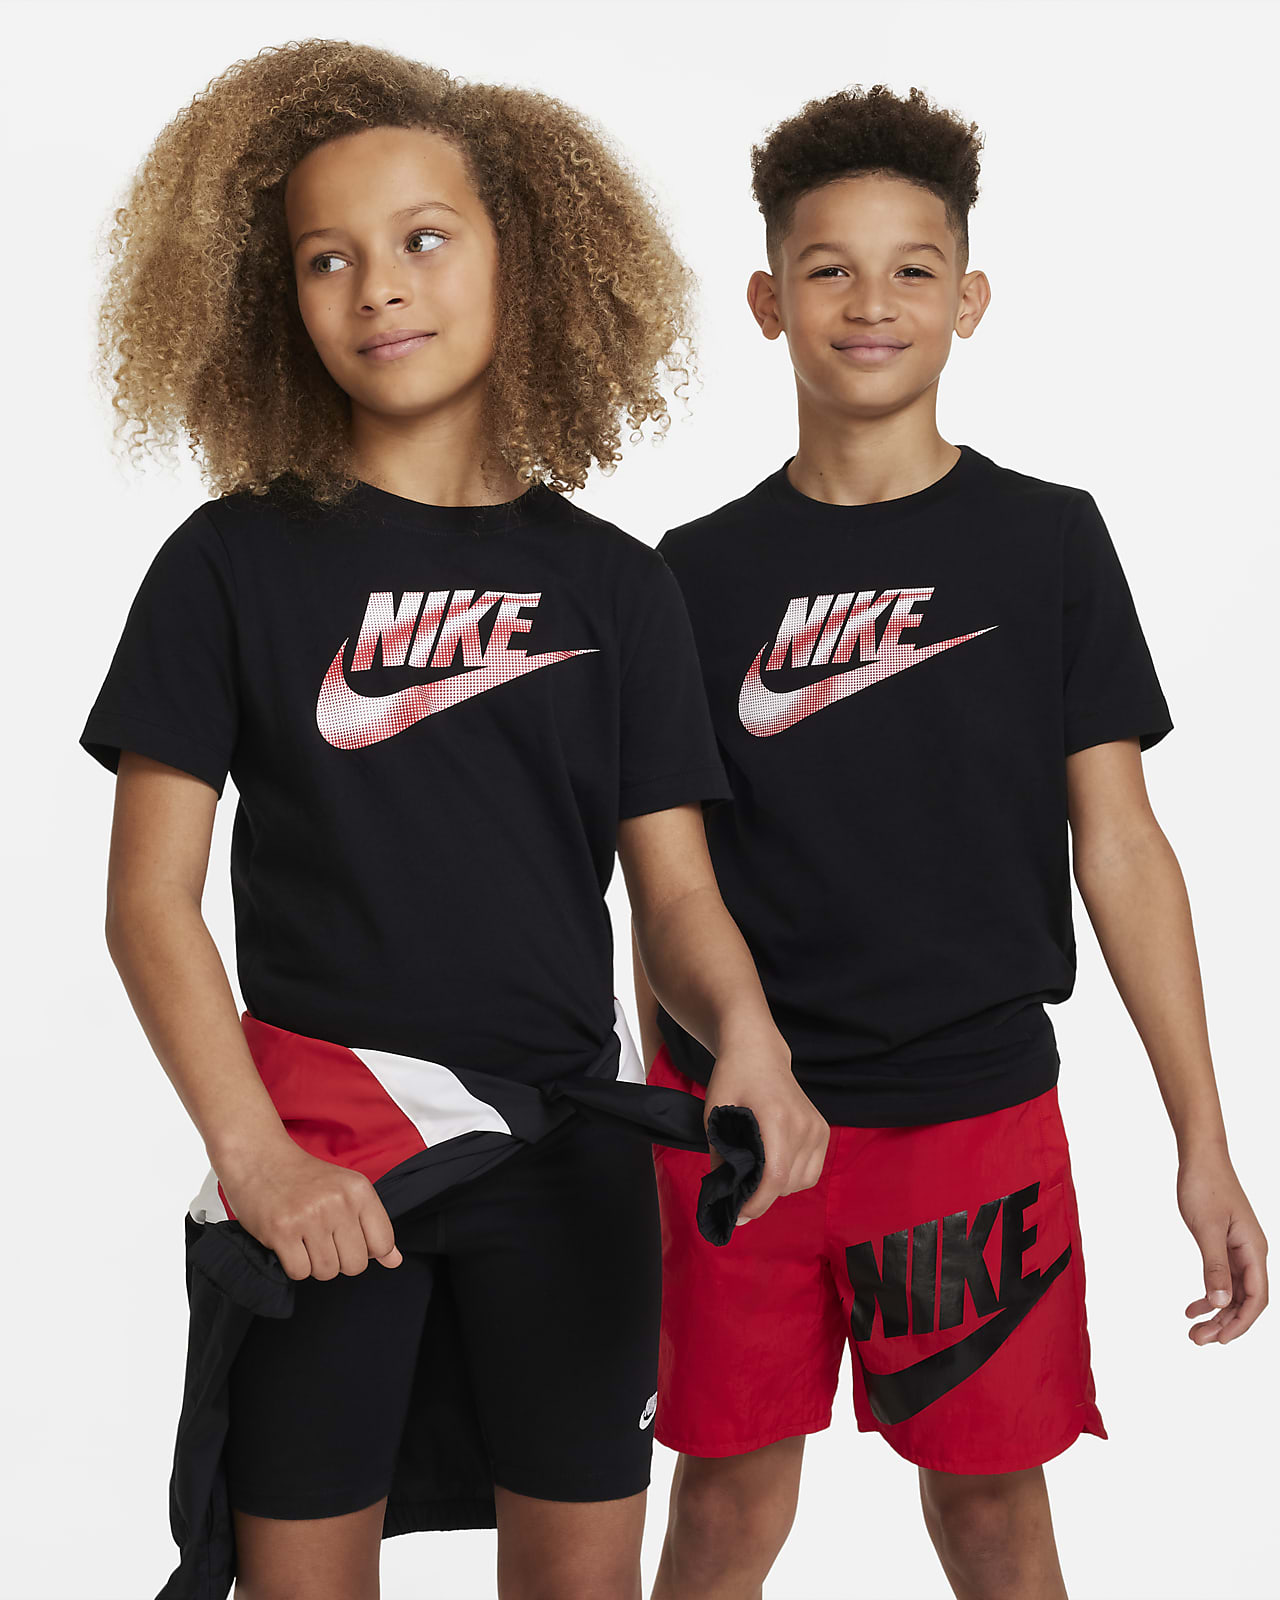 Garçons Ado (XS - XL) Sweat-shirts. Nike FR